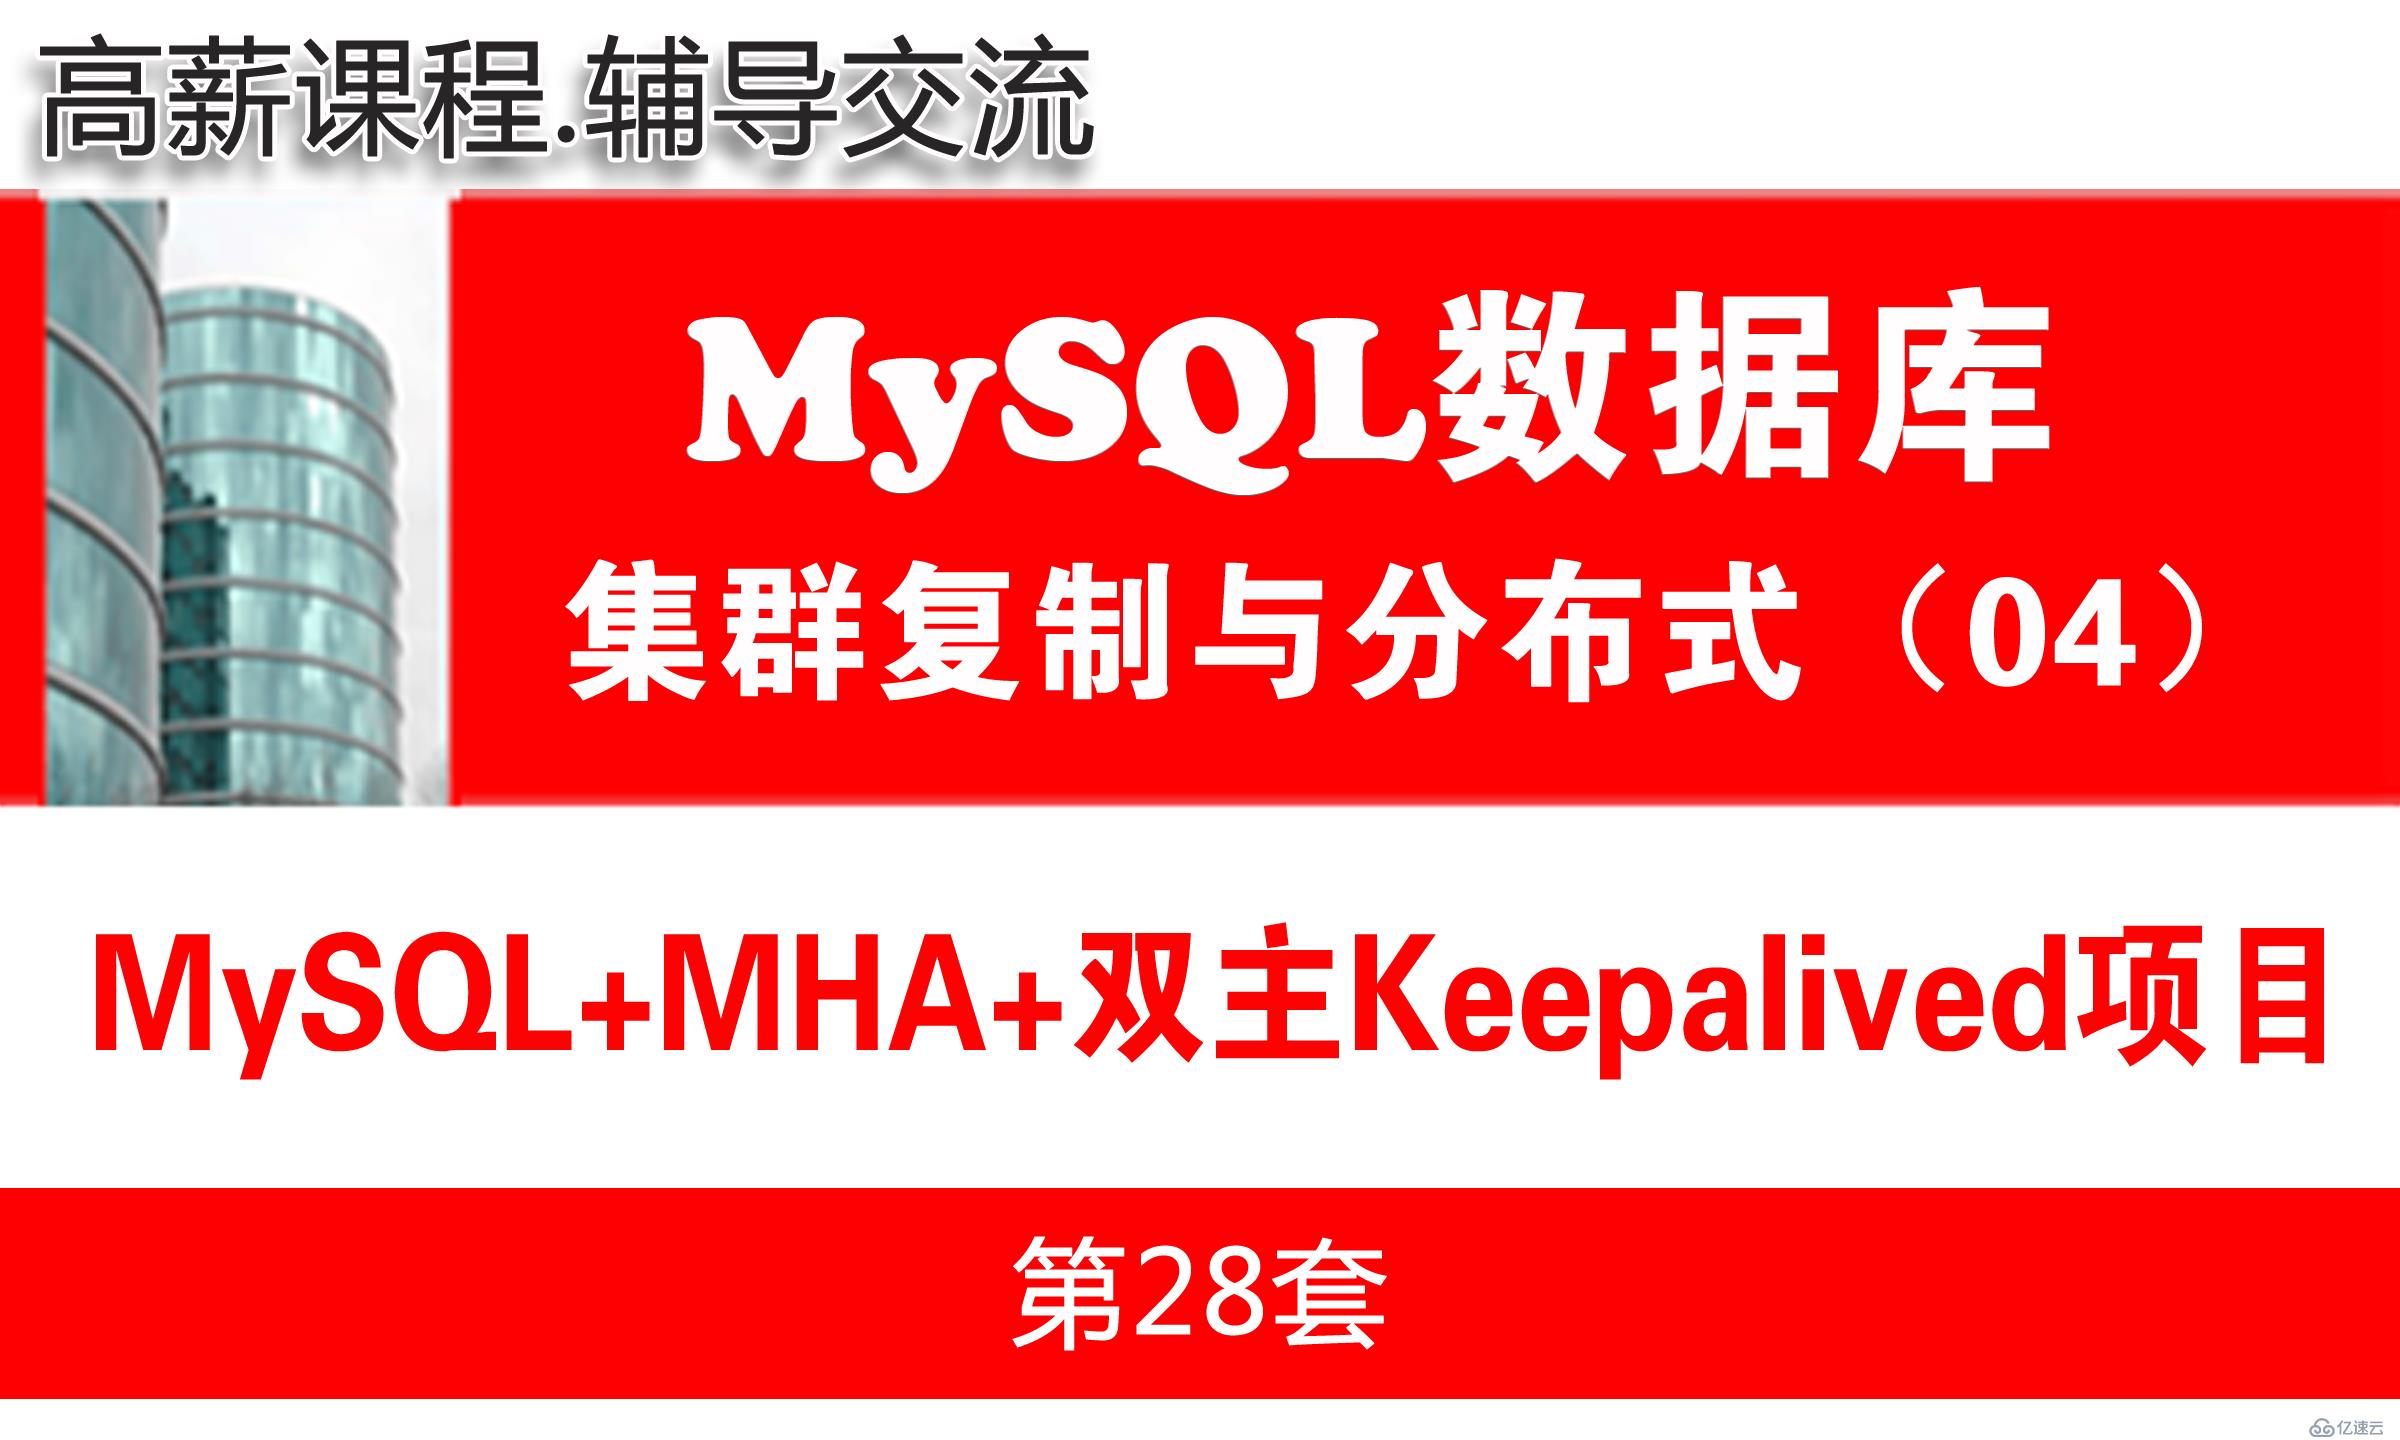  MySQL主从复制项目(尼古拉斯+双主keepalive) _MySQL高可用复制与分布式集群架构04 